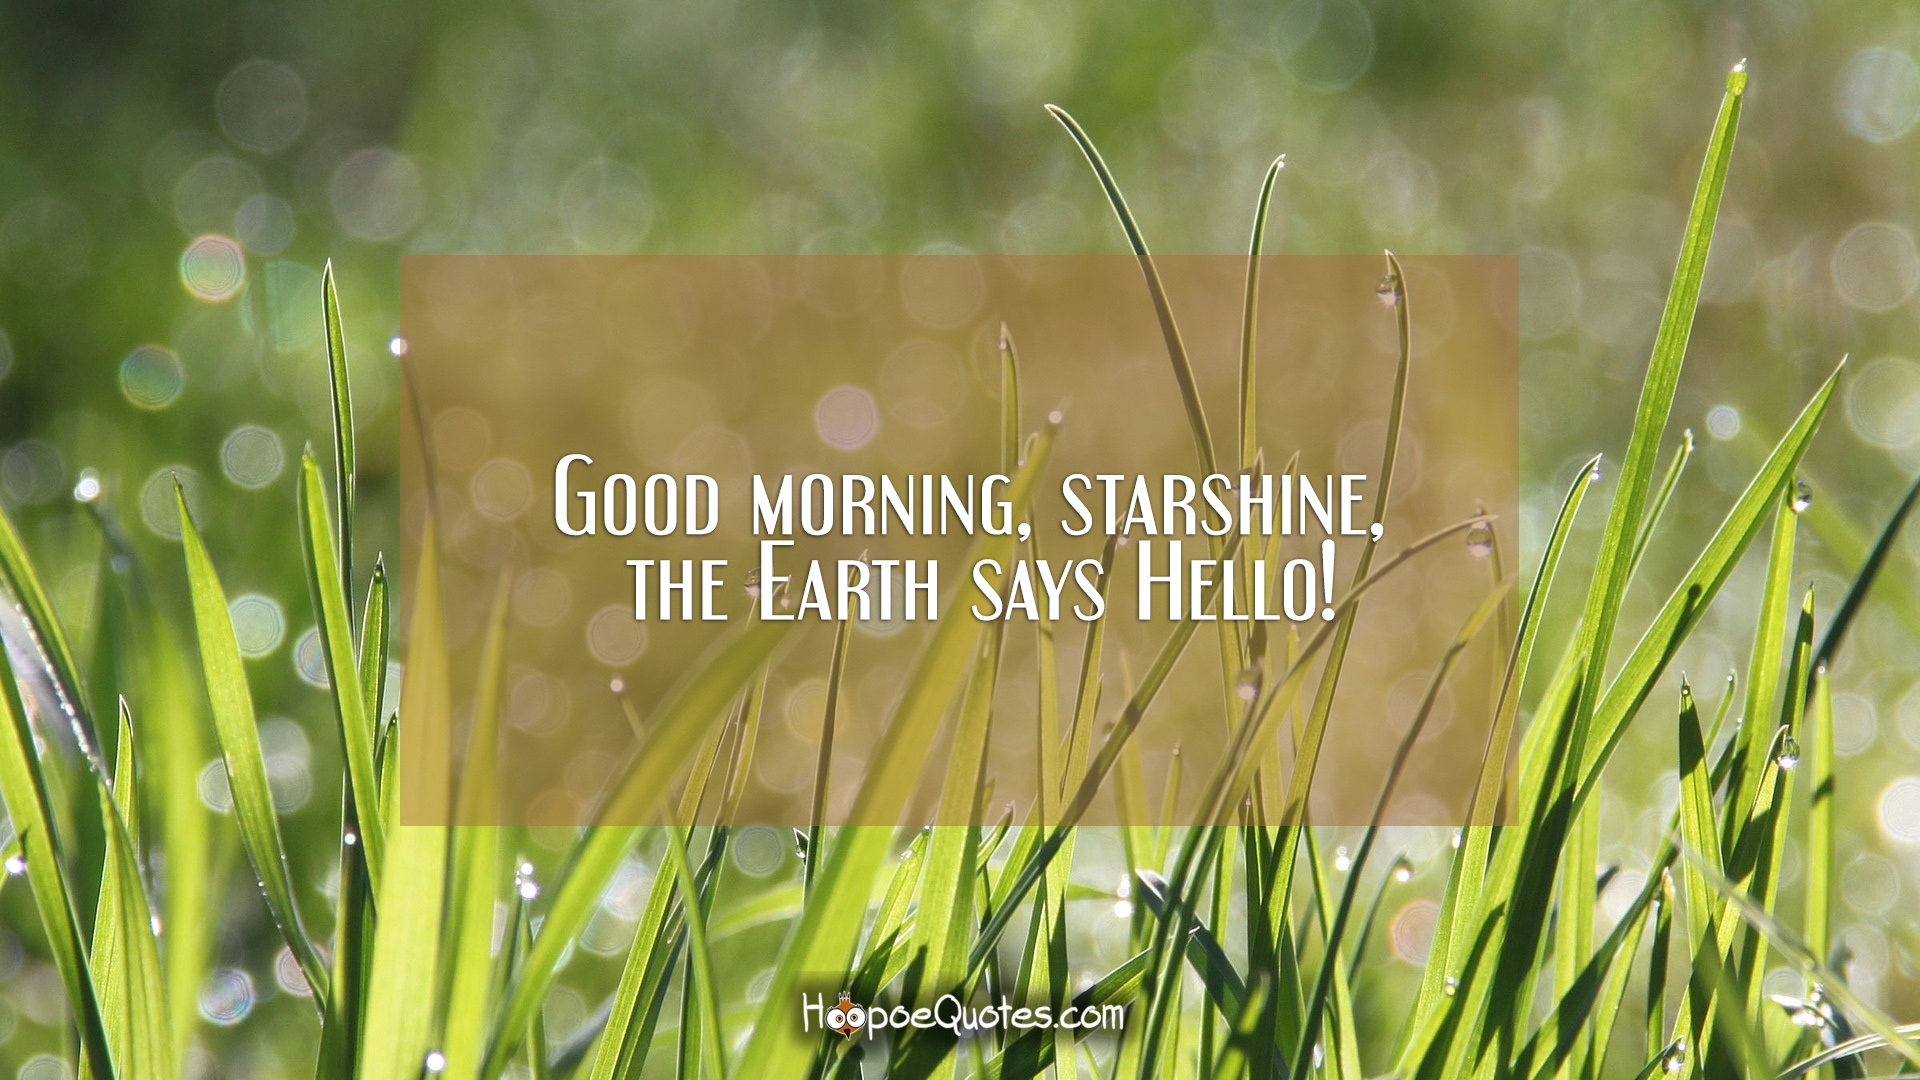 Good Morning, Starshine, The Earth Says Hello! - Hoopoequotes